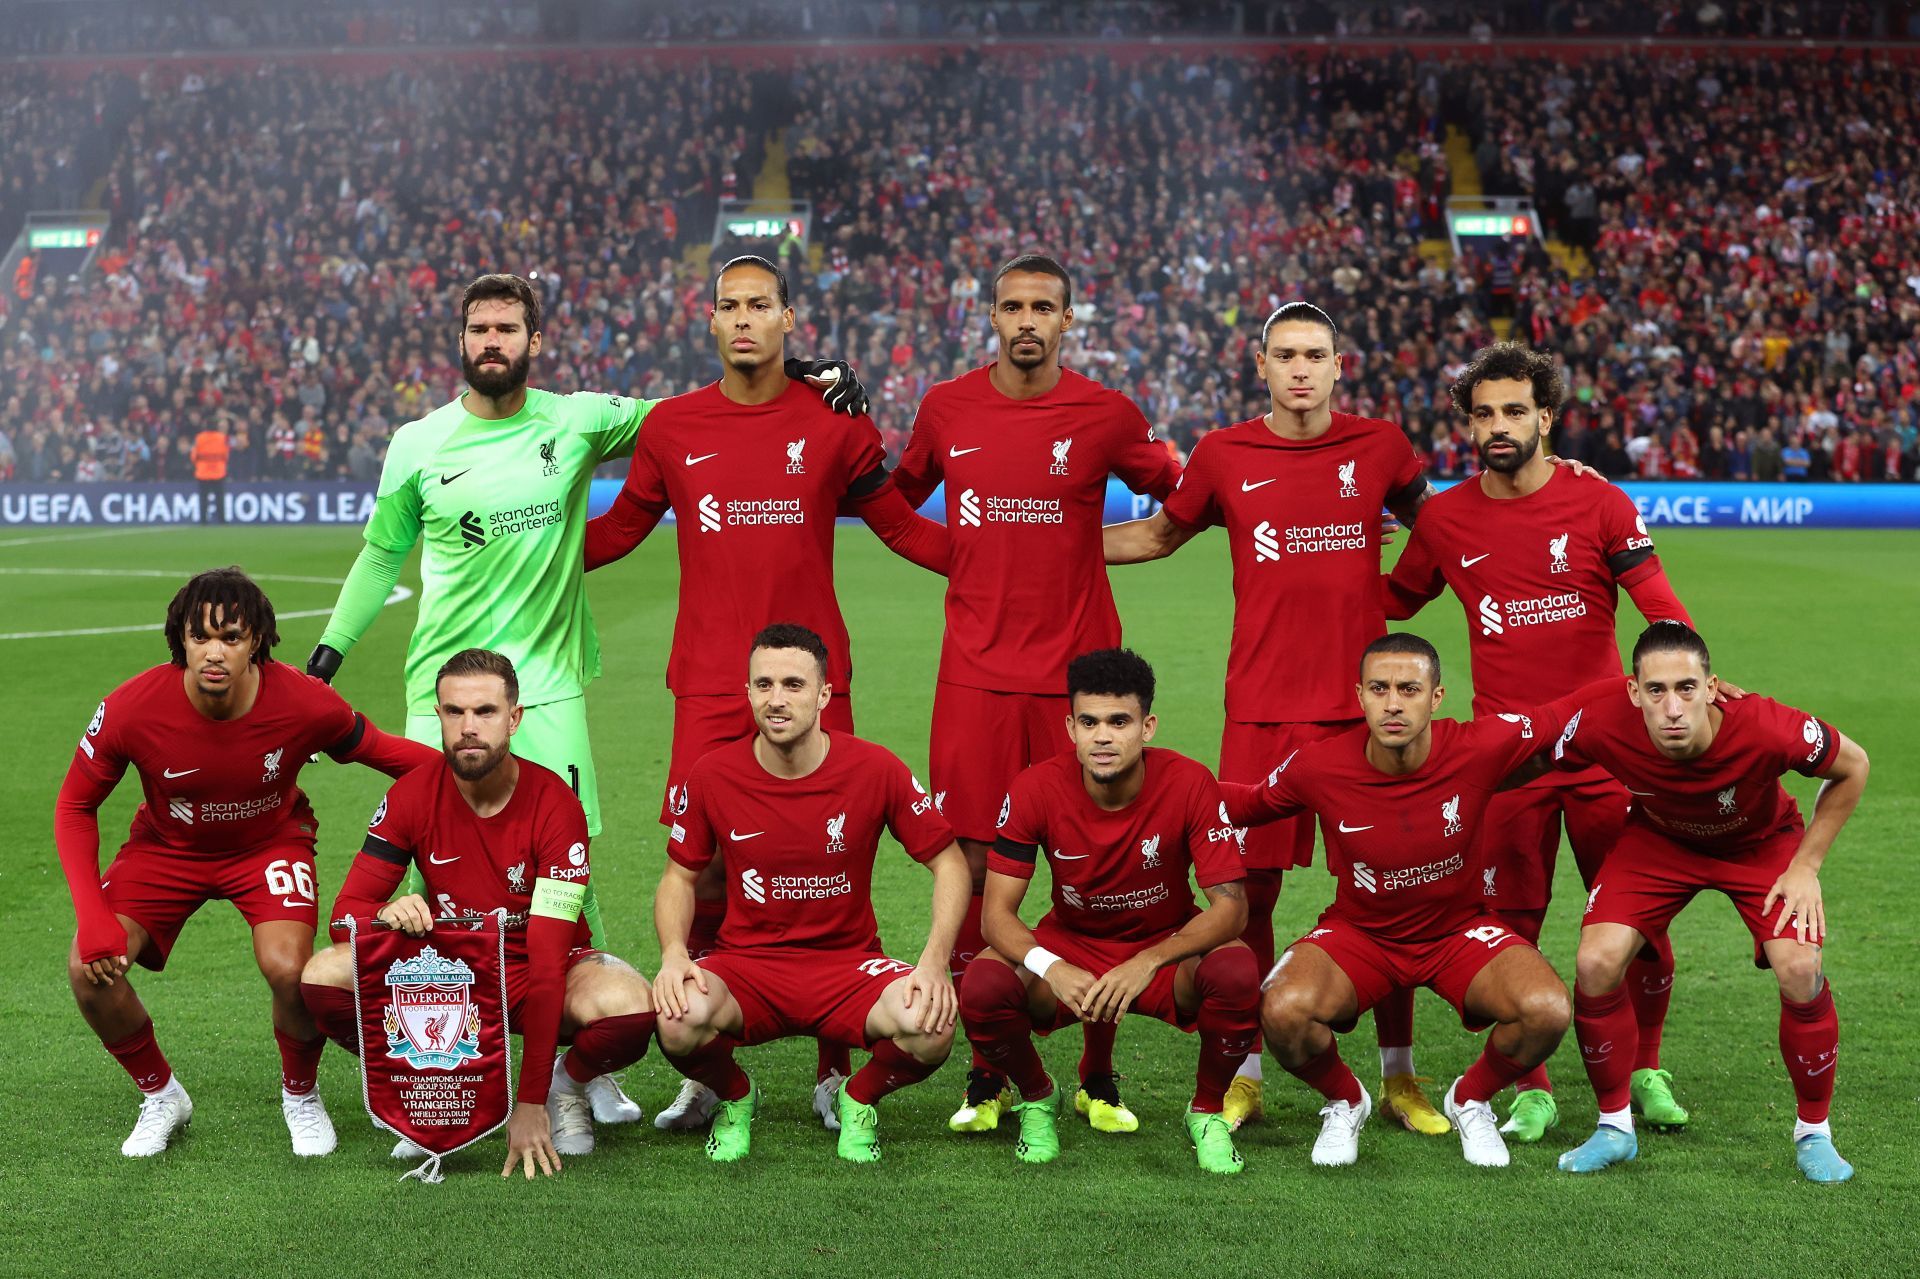 Liverpool FC v Rangers FC: Group A - UEFA Champions League